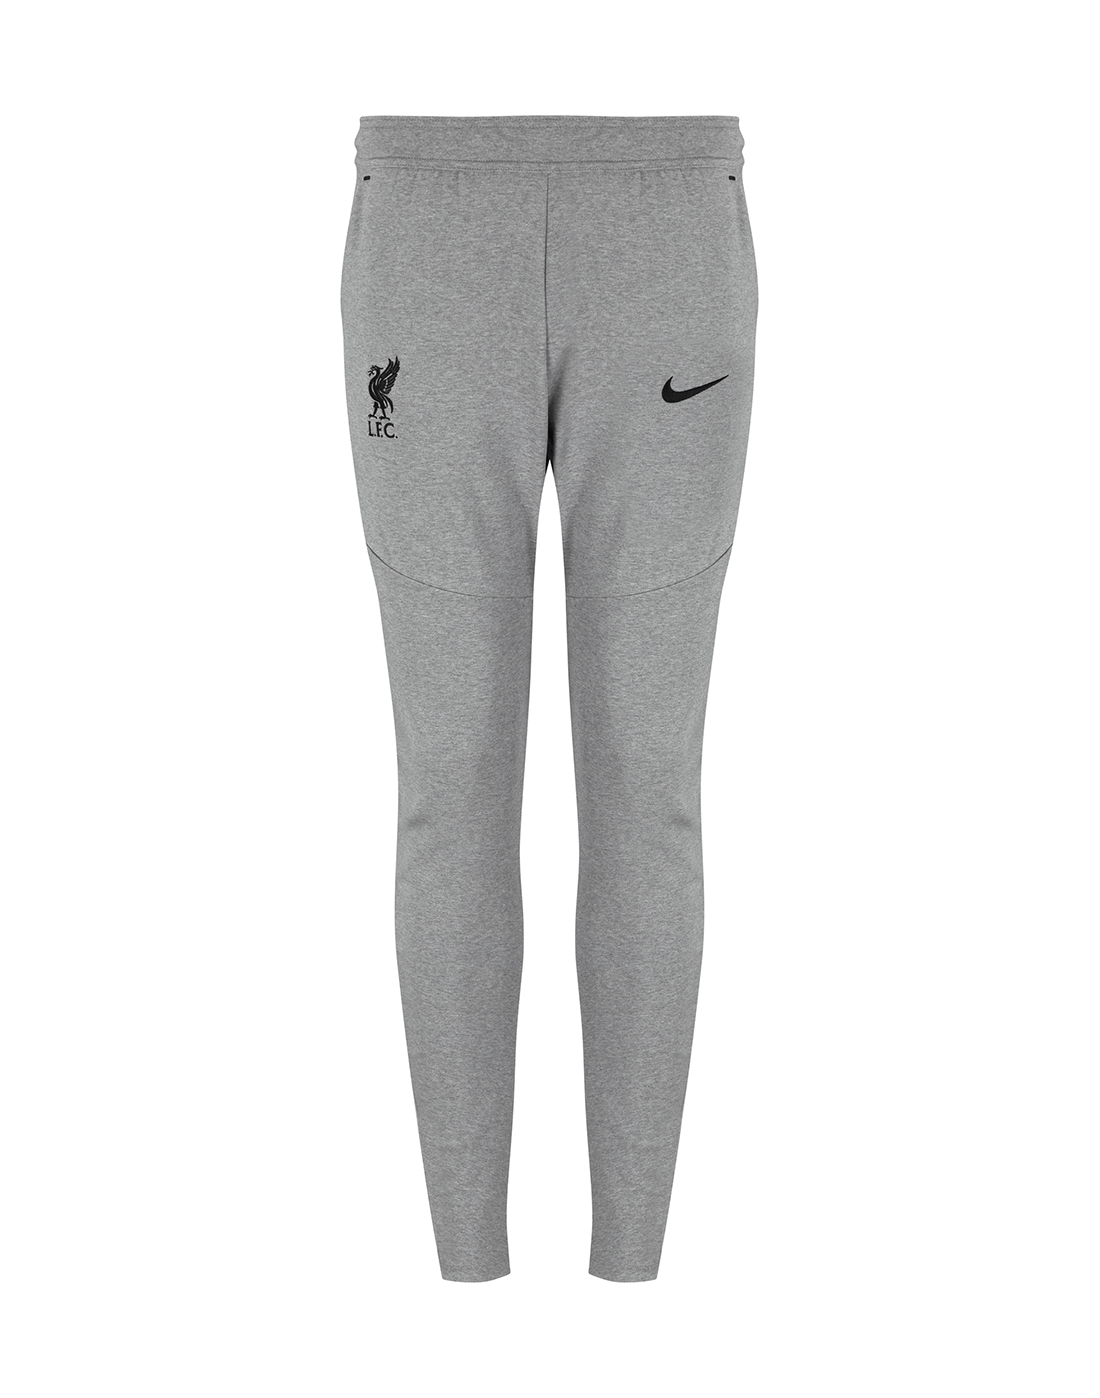 Nike Adult Tech Fleece Pants - Grey | Life Sports EU